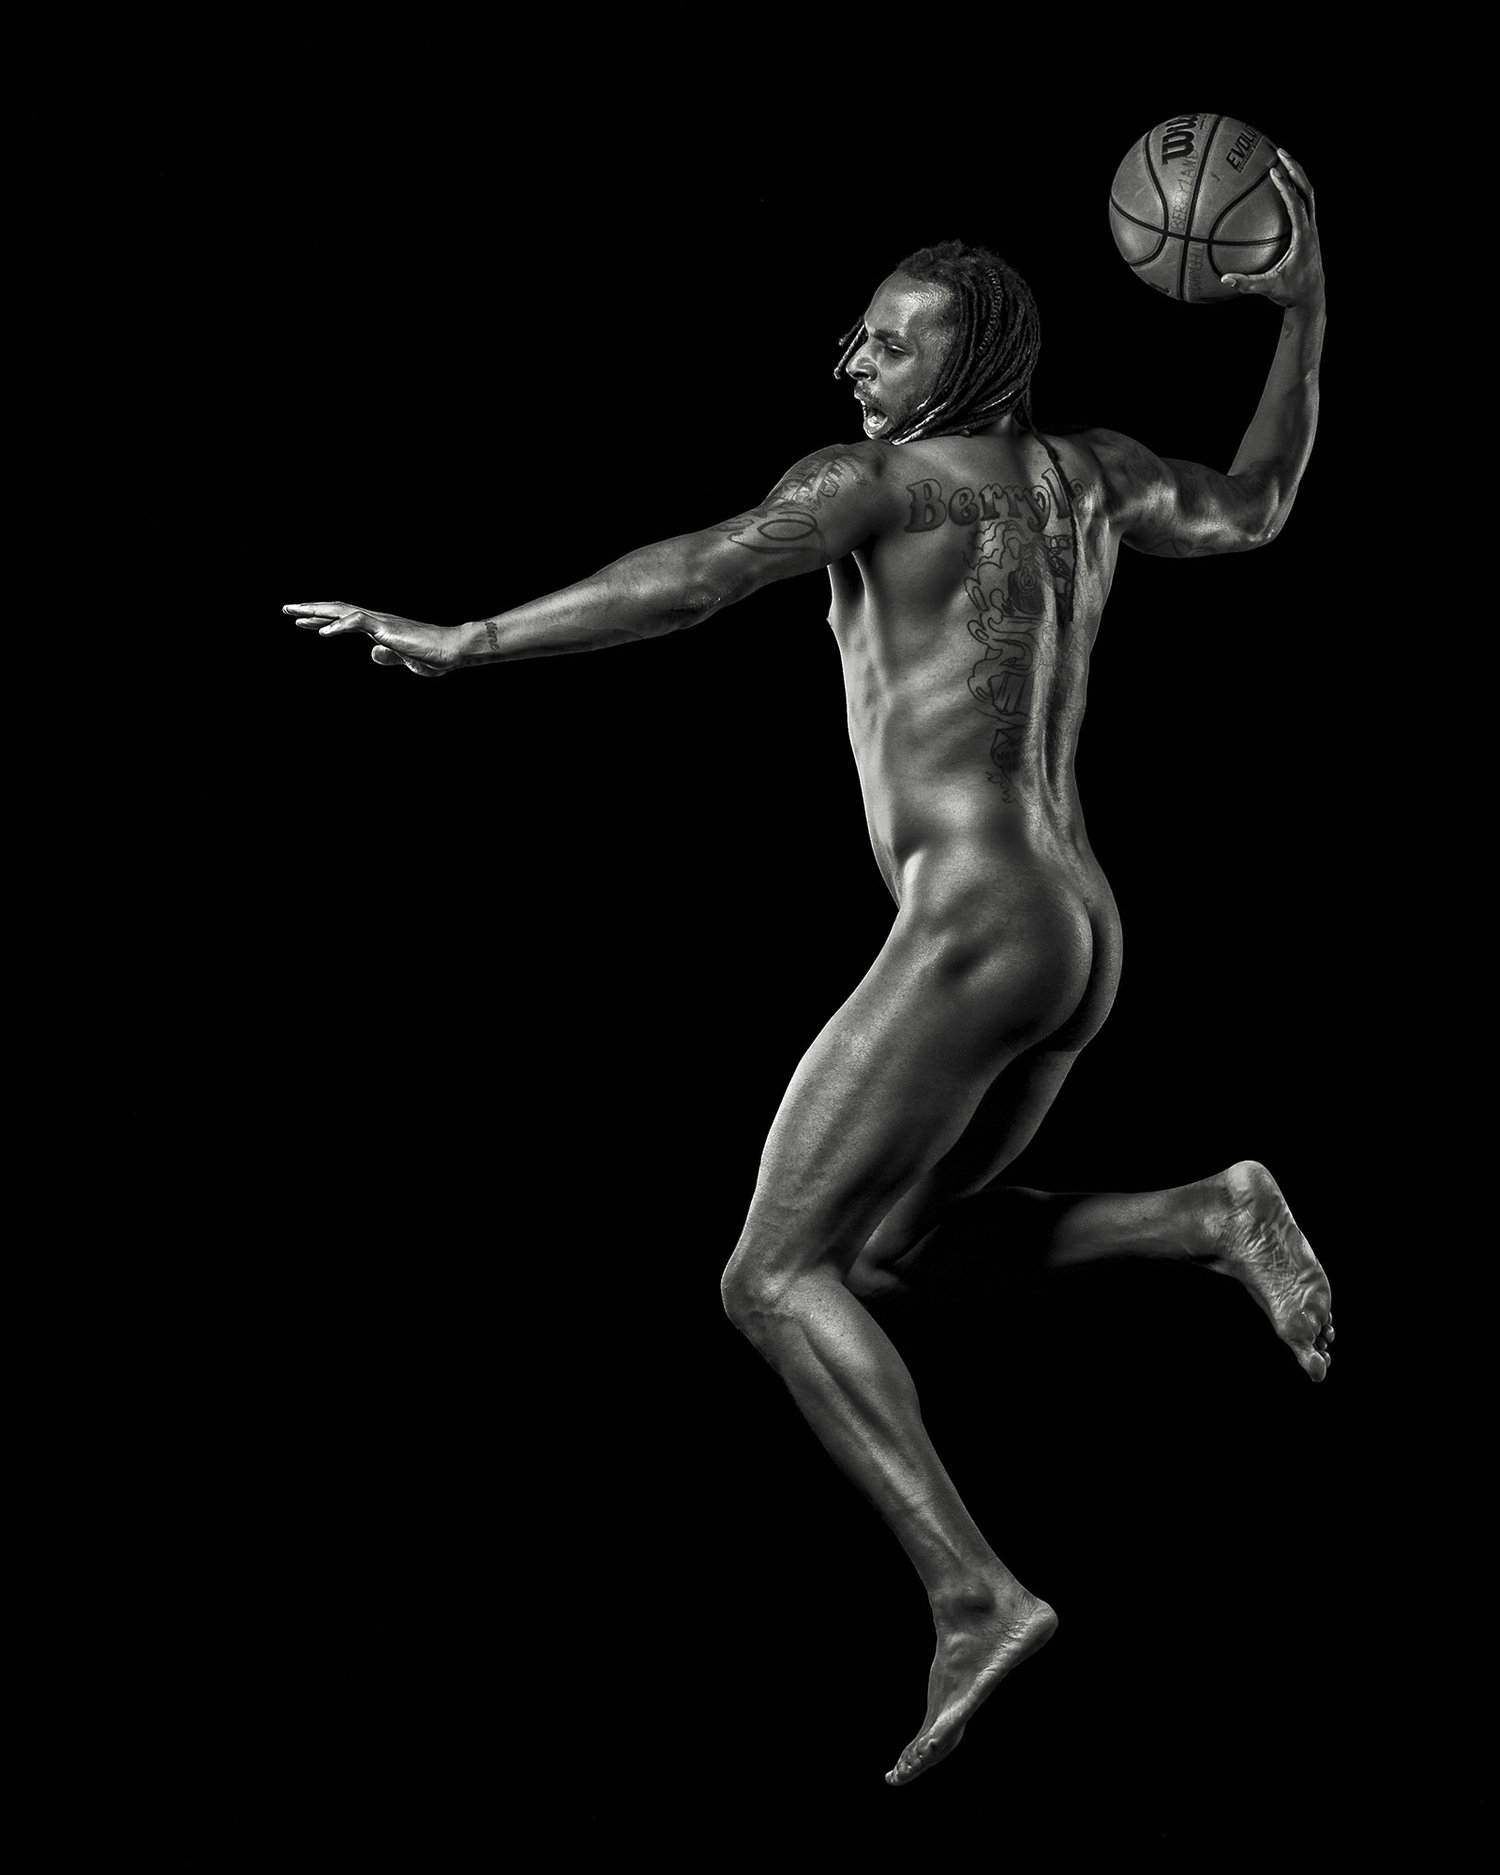 Naked athlete pics